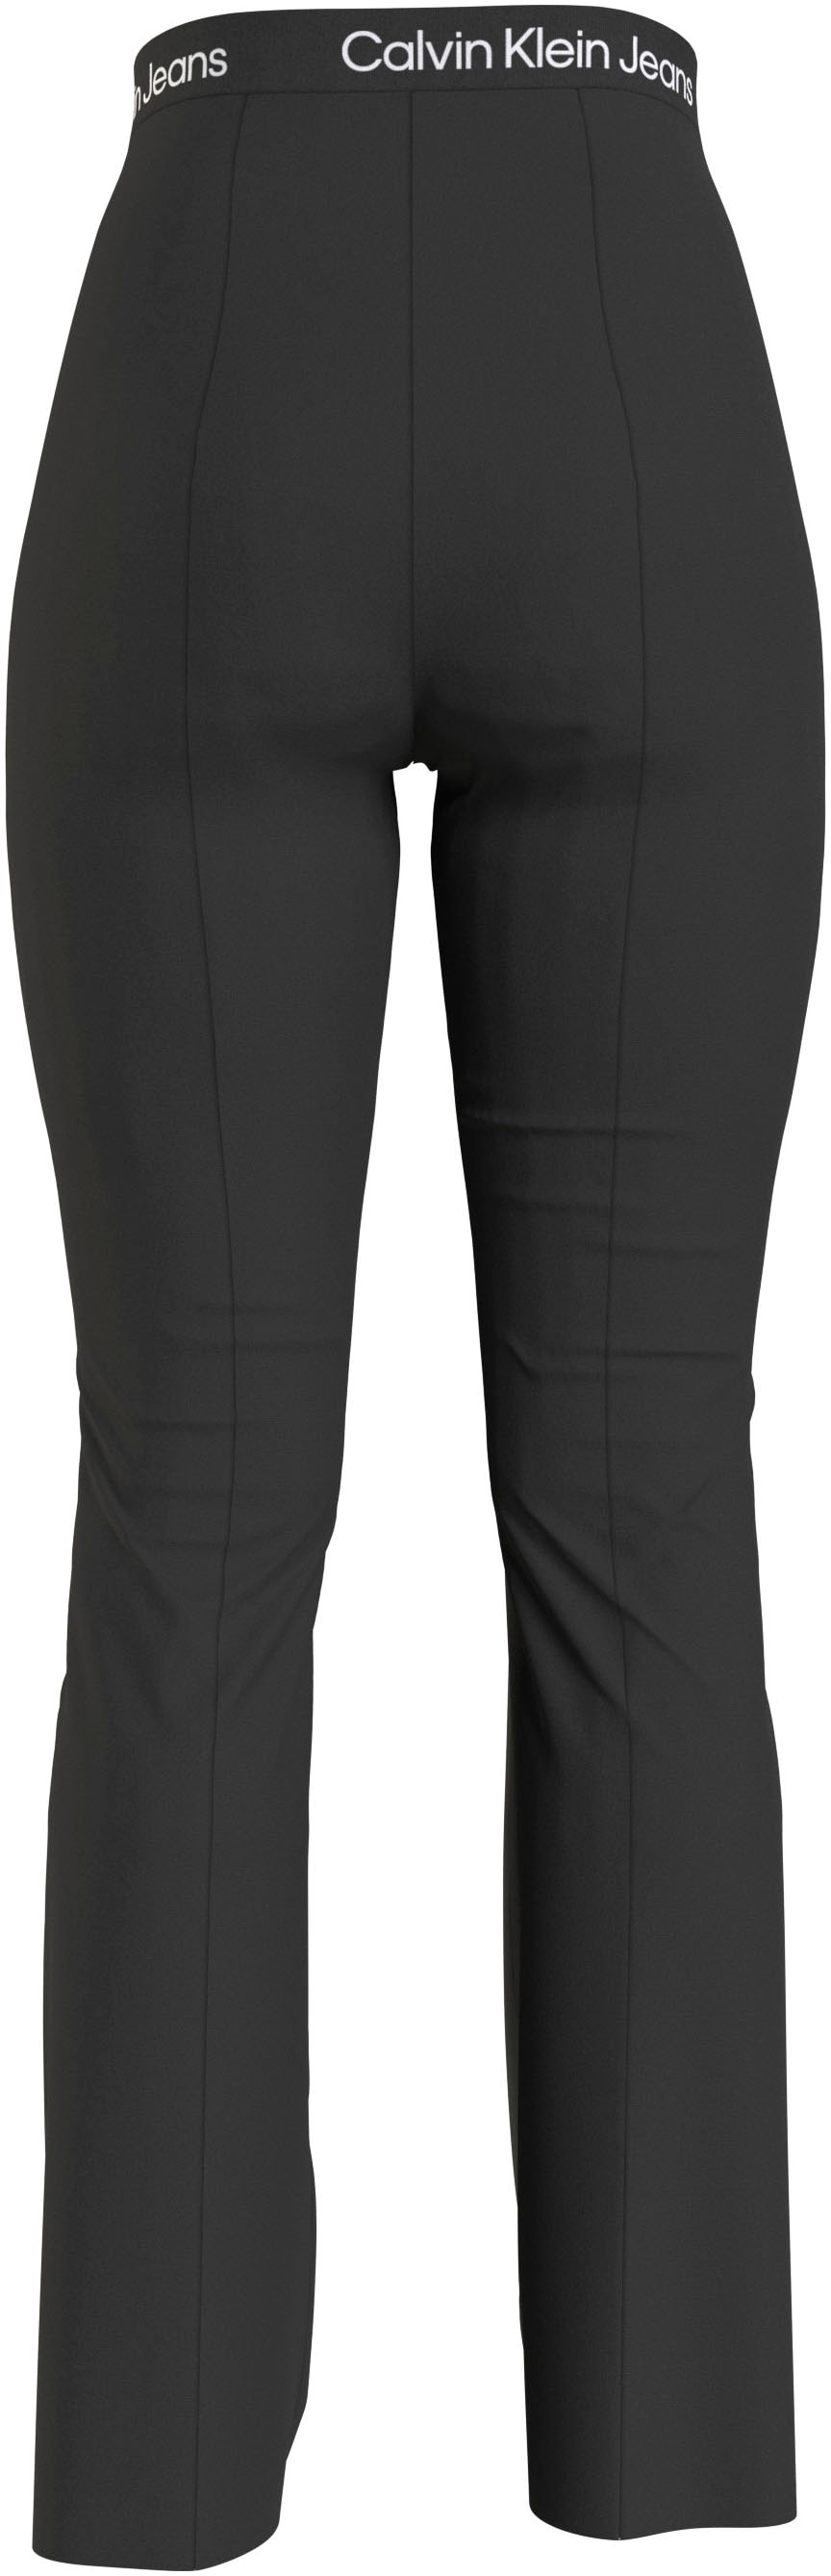 ♕ Calvin Klein Jeans MILANO auf versandkostenfrei »TAPE FLARE LEGGING« Leggings